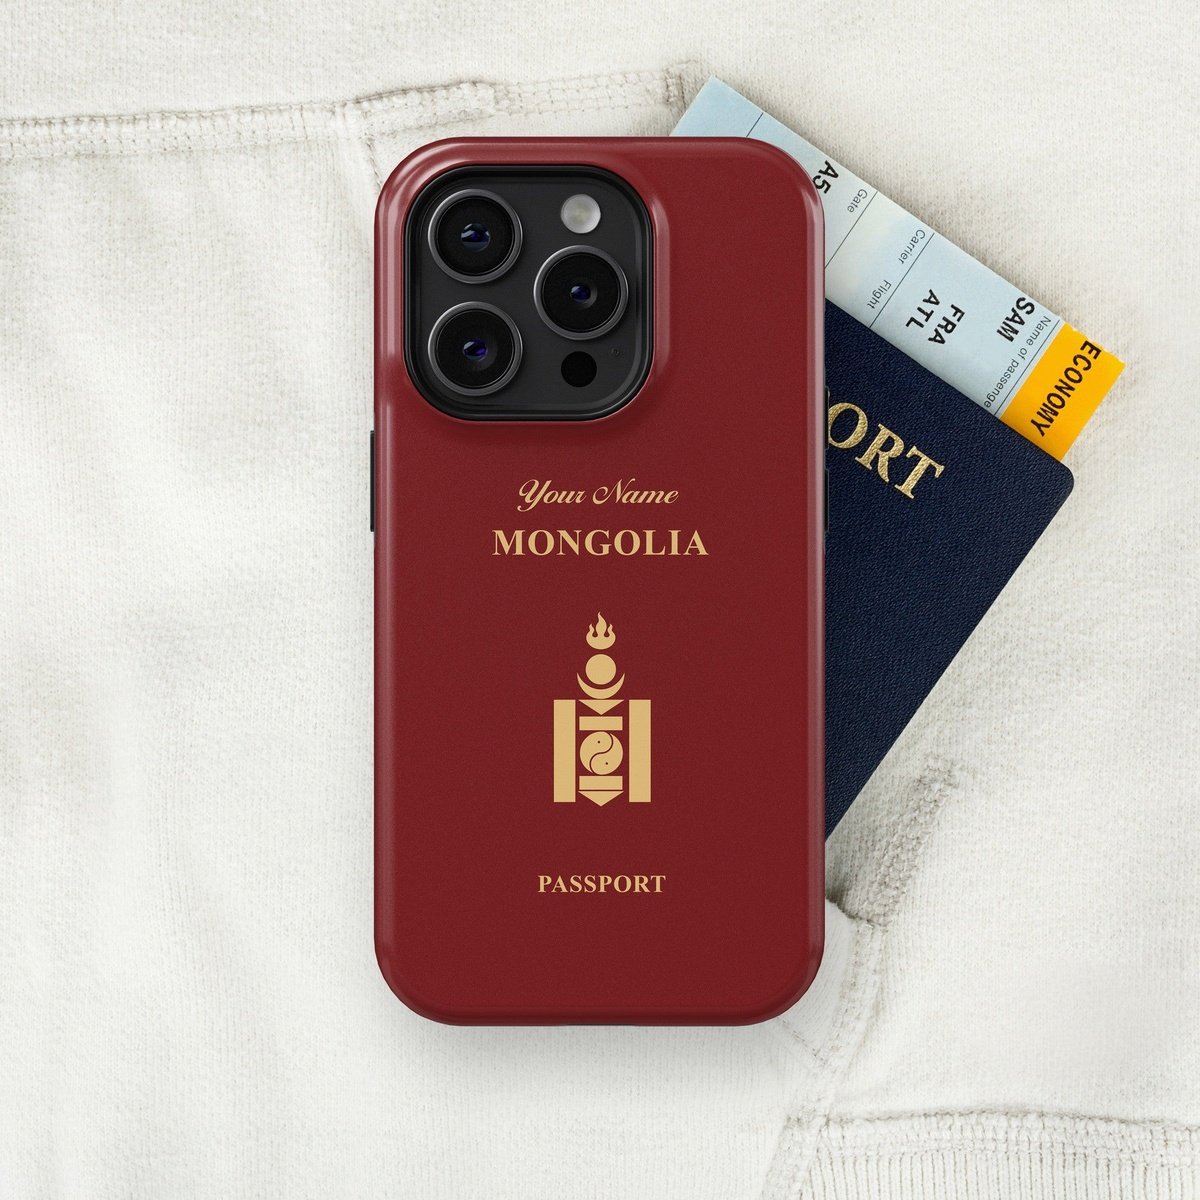 Mongolia Passport - iPhone Case Tough Case